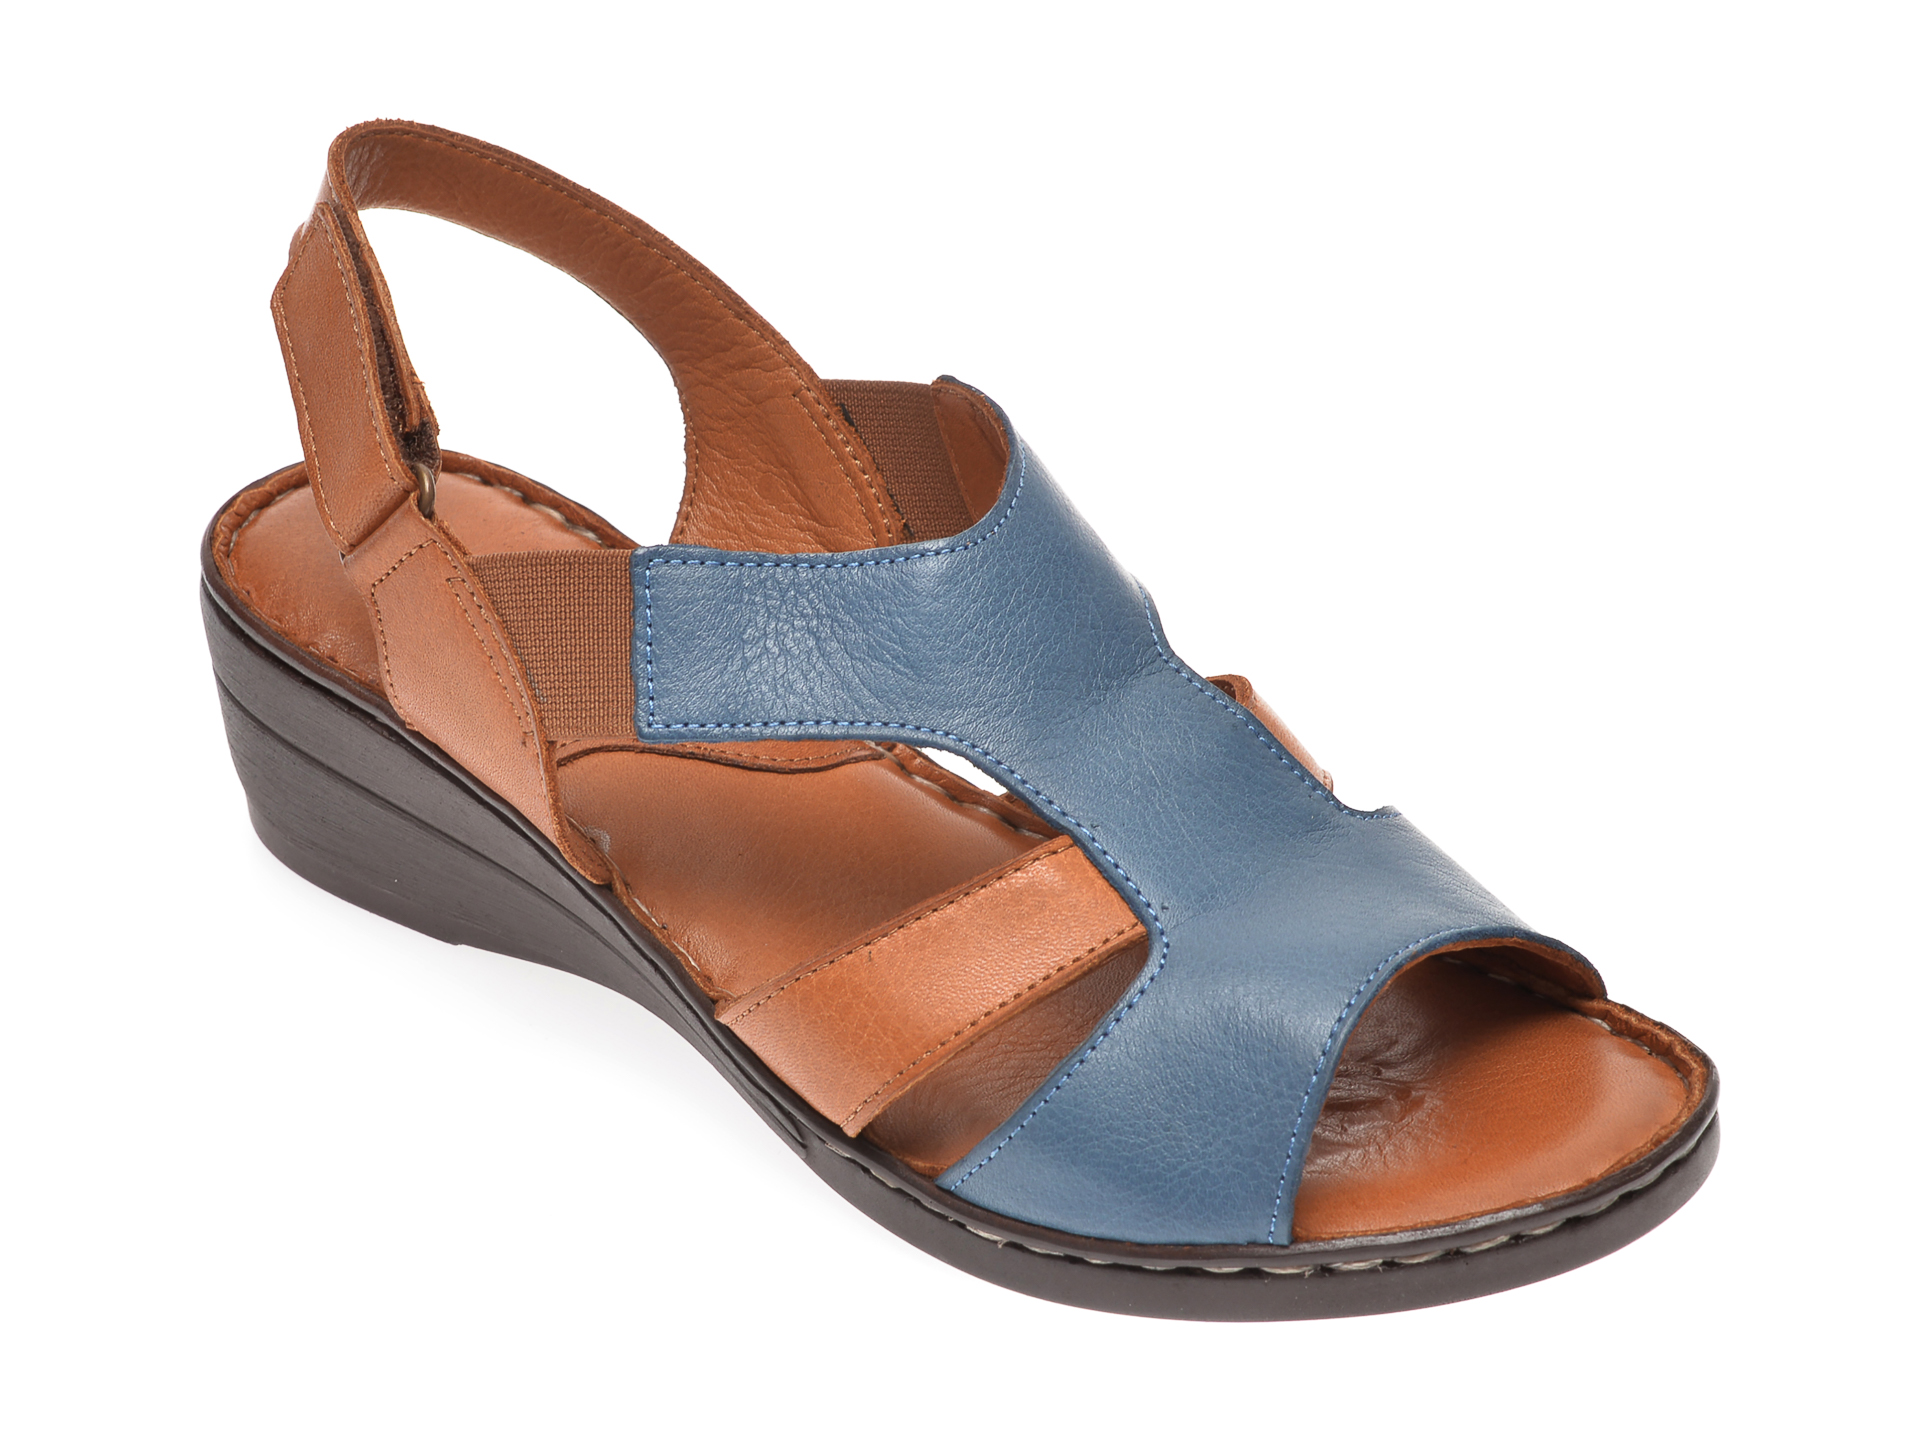 Sandale PASS COLLECTION albastre, 411, din piele naturala PASS COLLECTION imagine reduceri